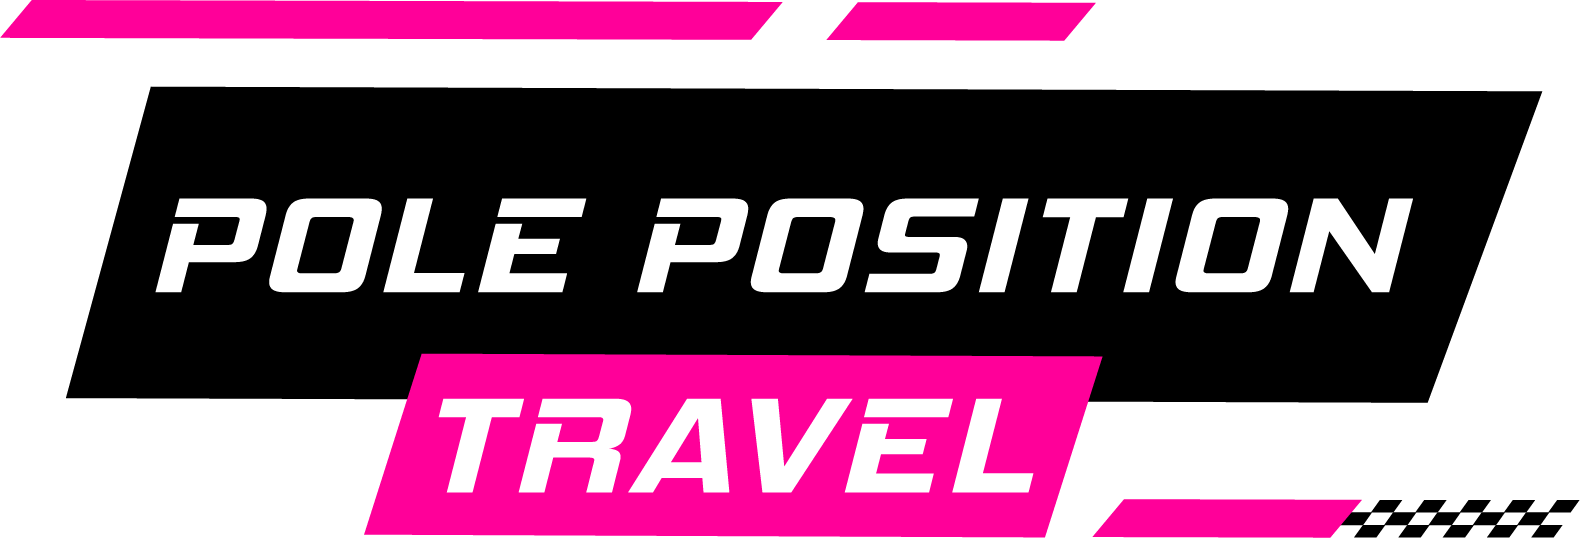 pole position travel